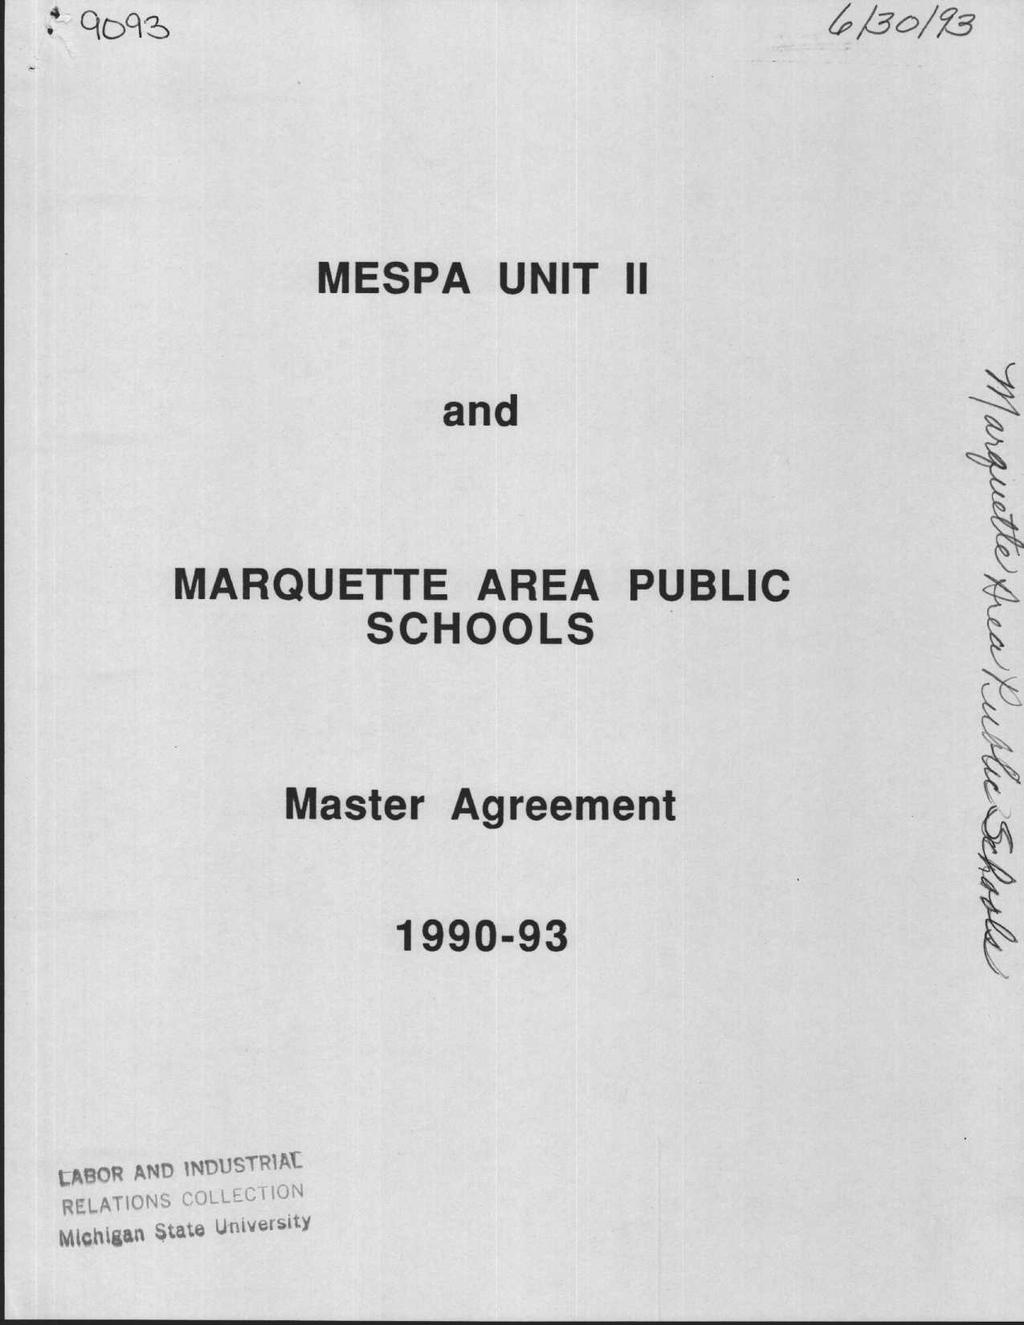 MESPA UNIT II and MARQUETTE AREA PUBLIC SCHOOLS Master Agreement